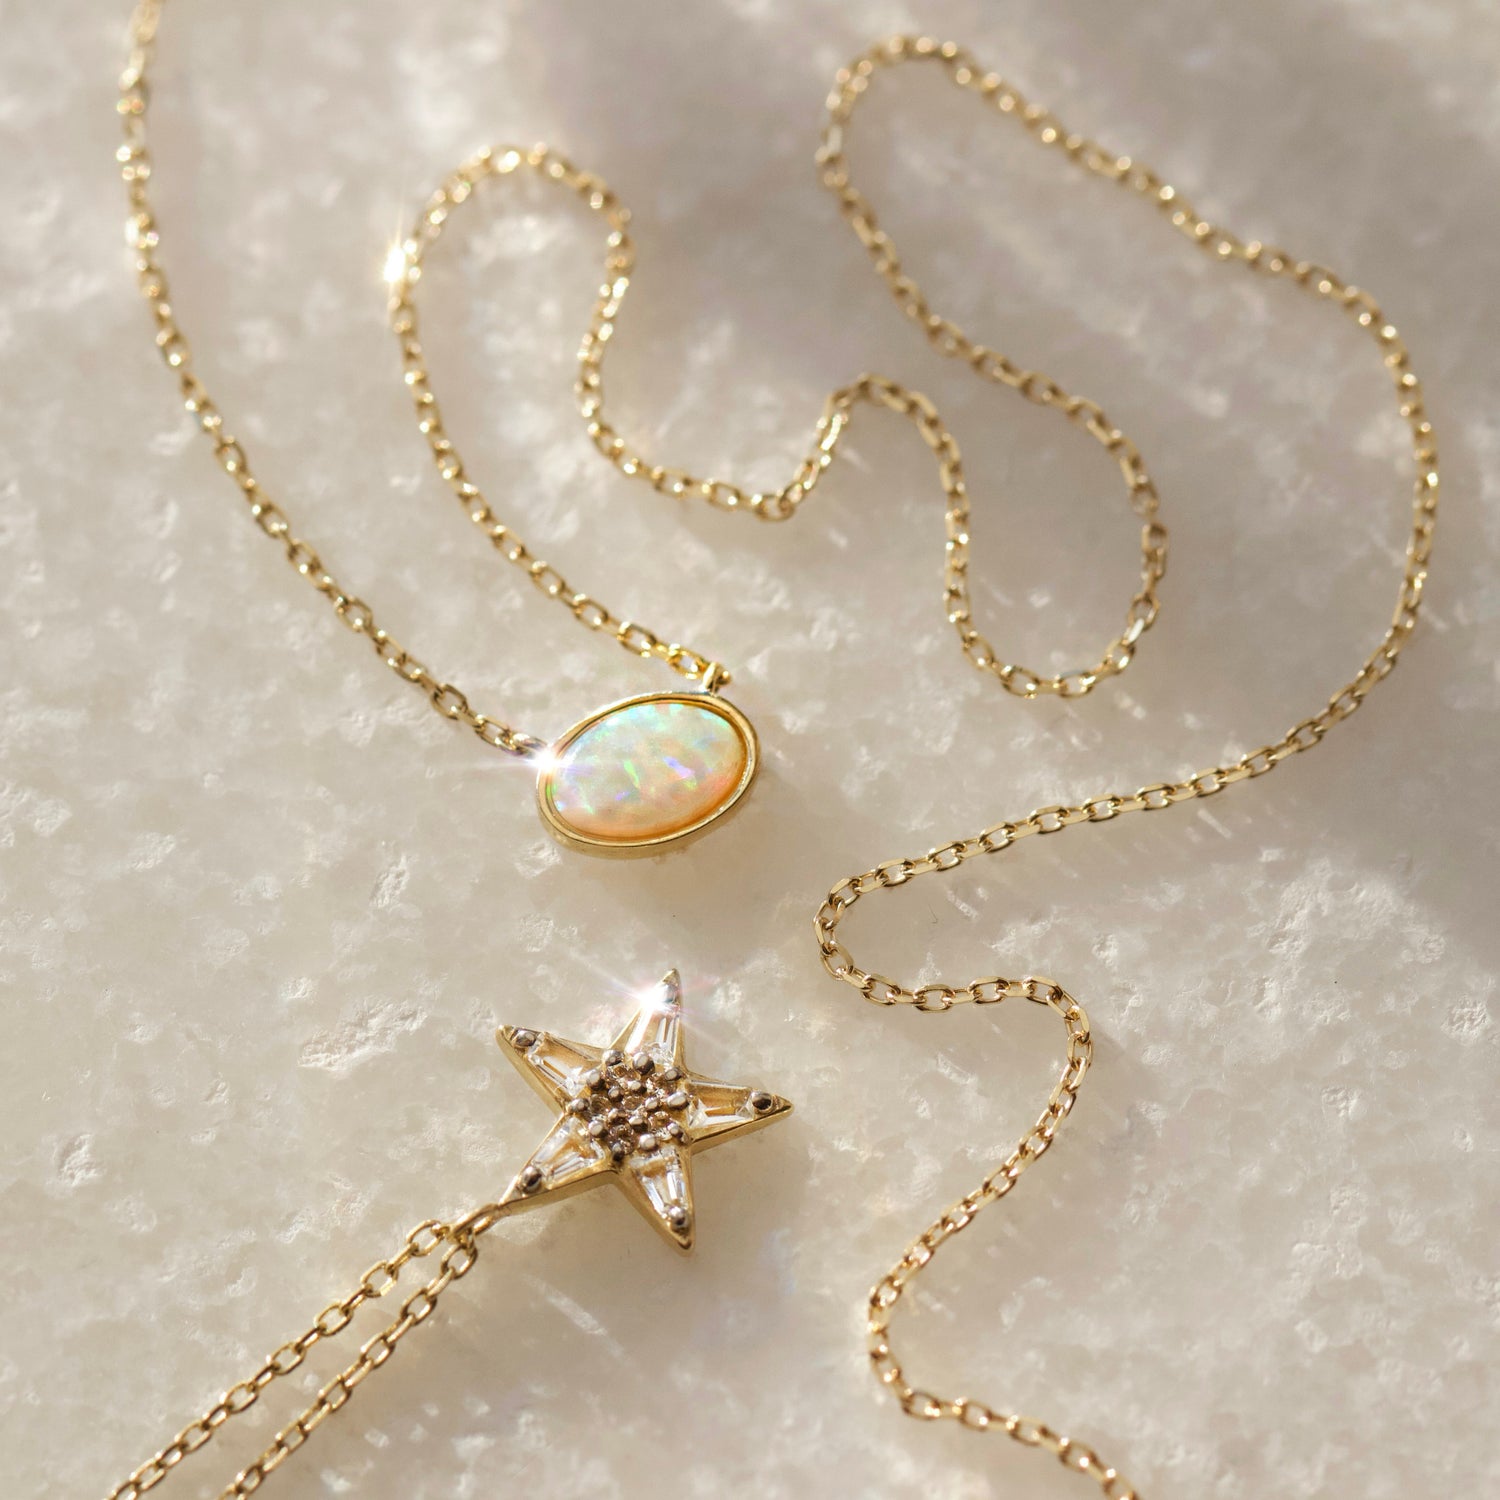 carrie elizabeth opal necklace in 9k solid gold